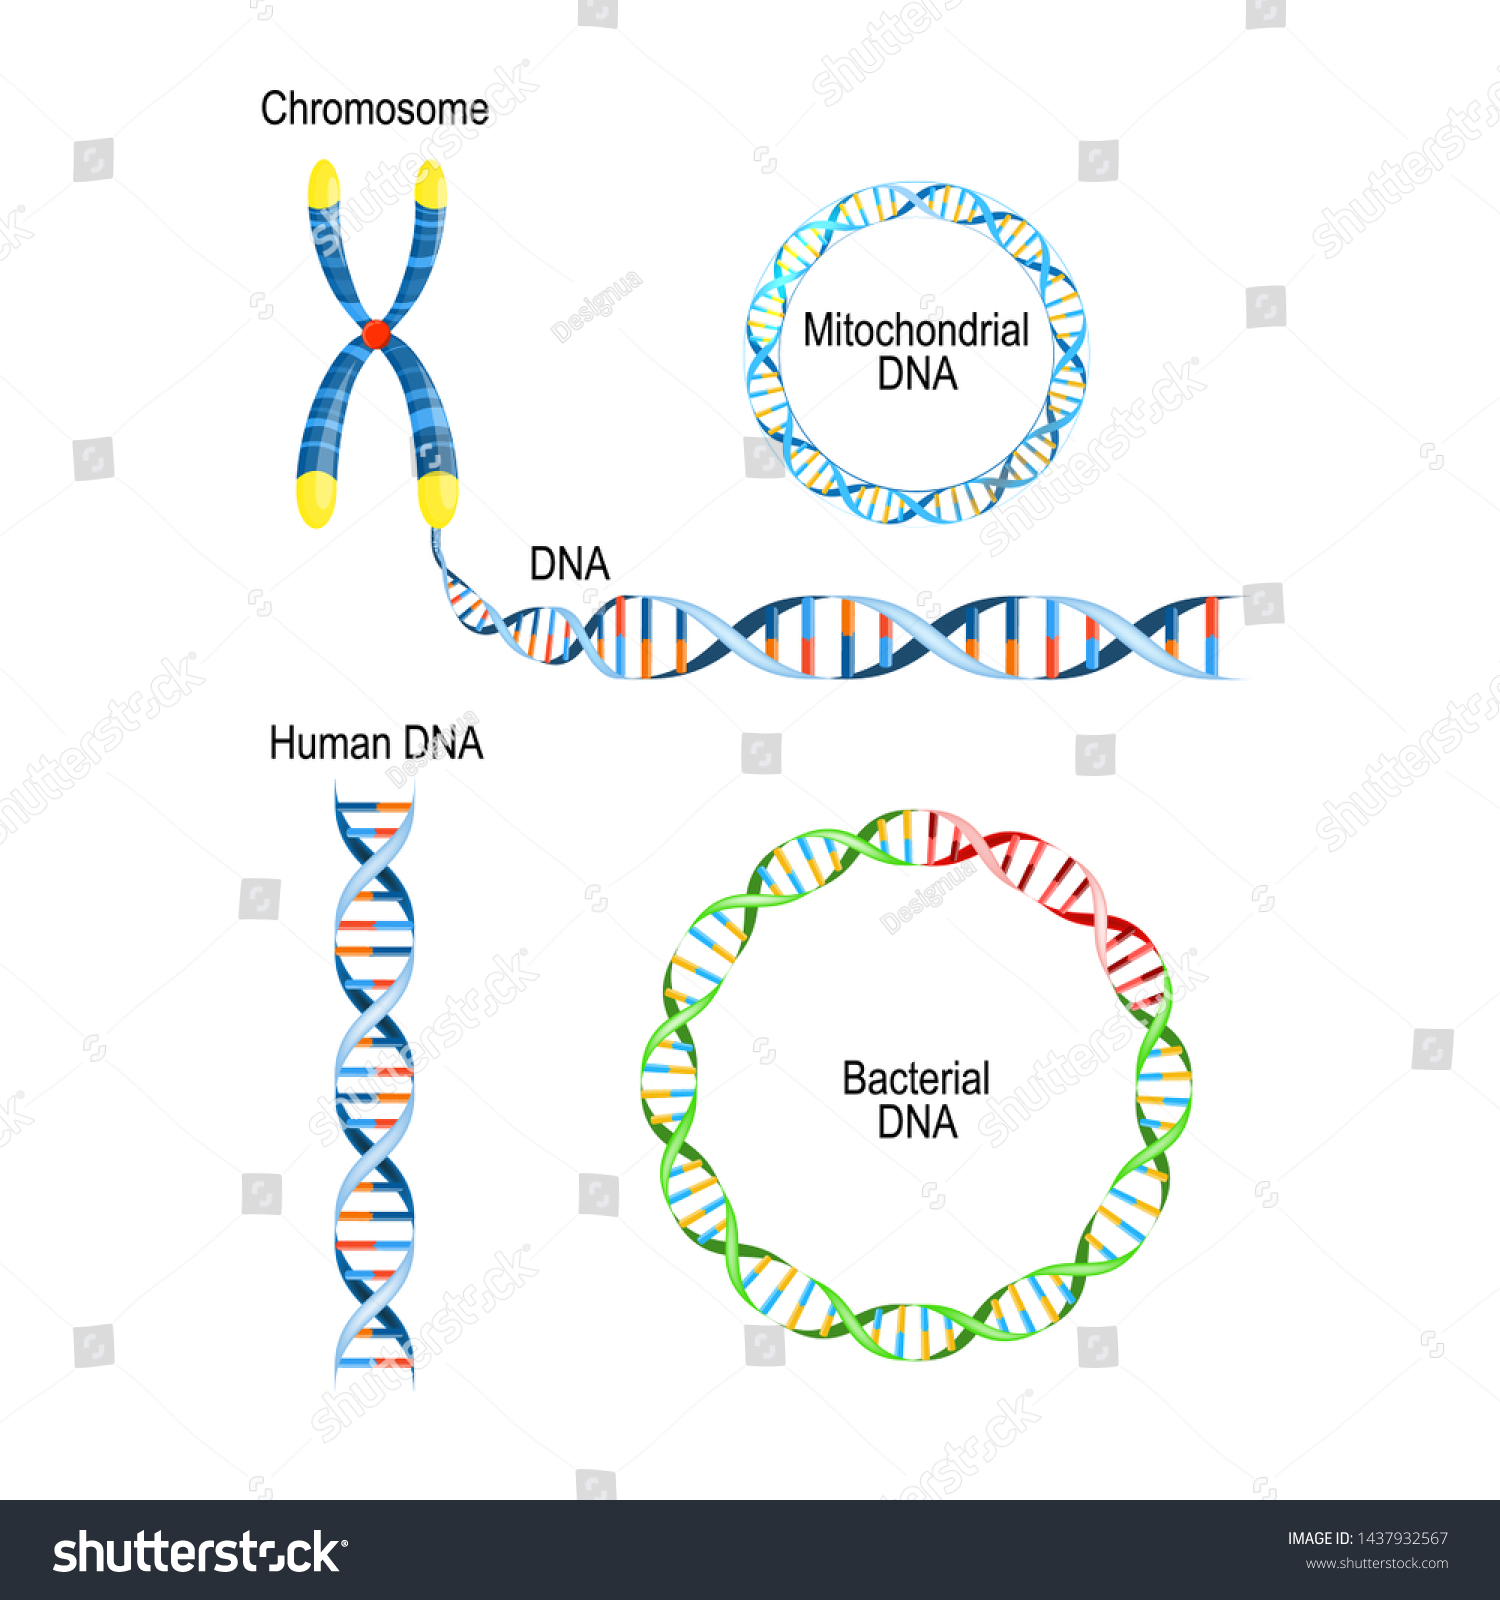 13 Circular bacterial chromosome Images, Stock Photos & Vectors ...